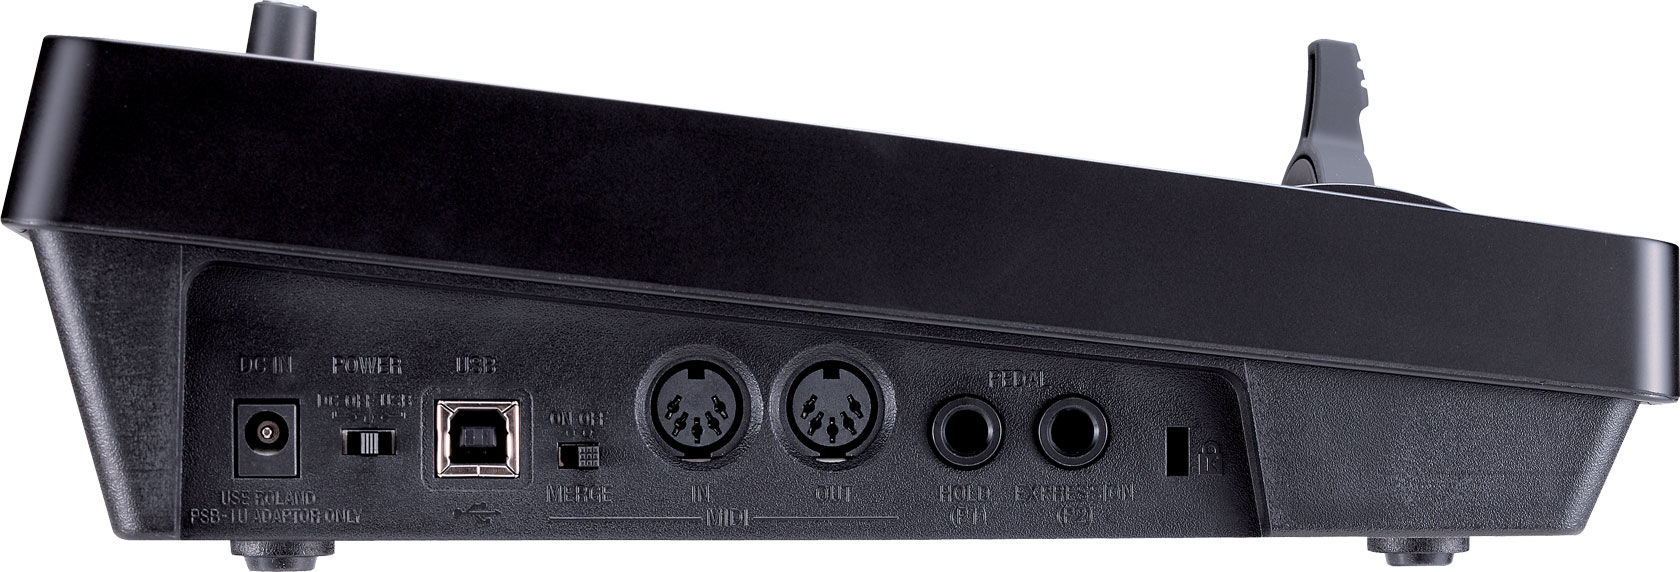 Roland - A-500PRO | MIDI Keyboard Controller